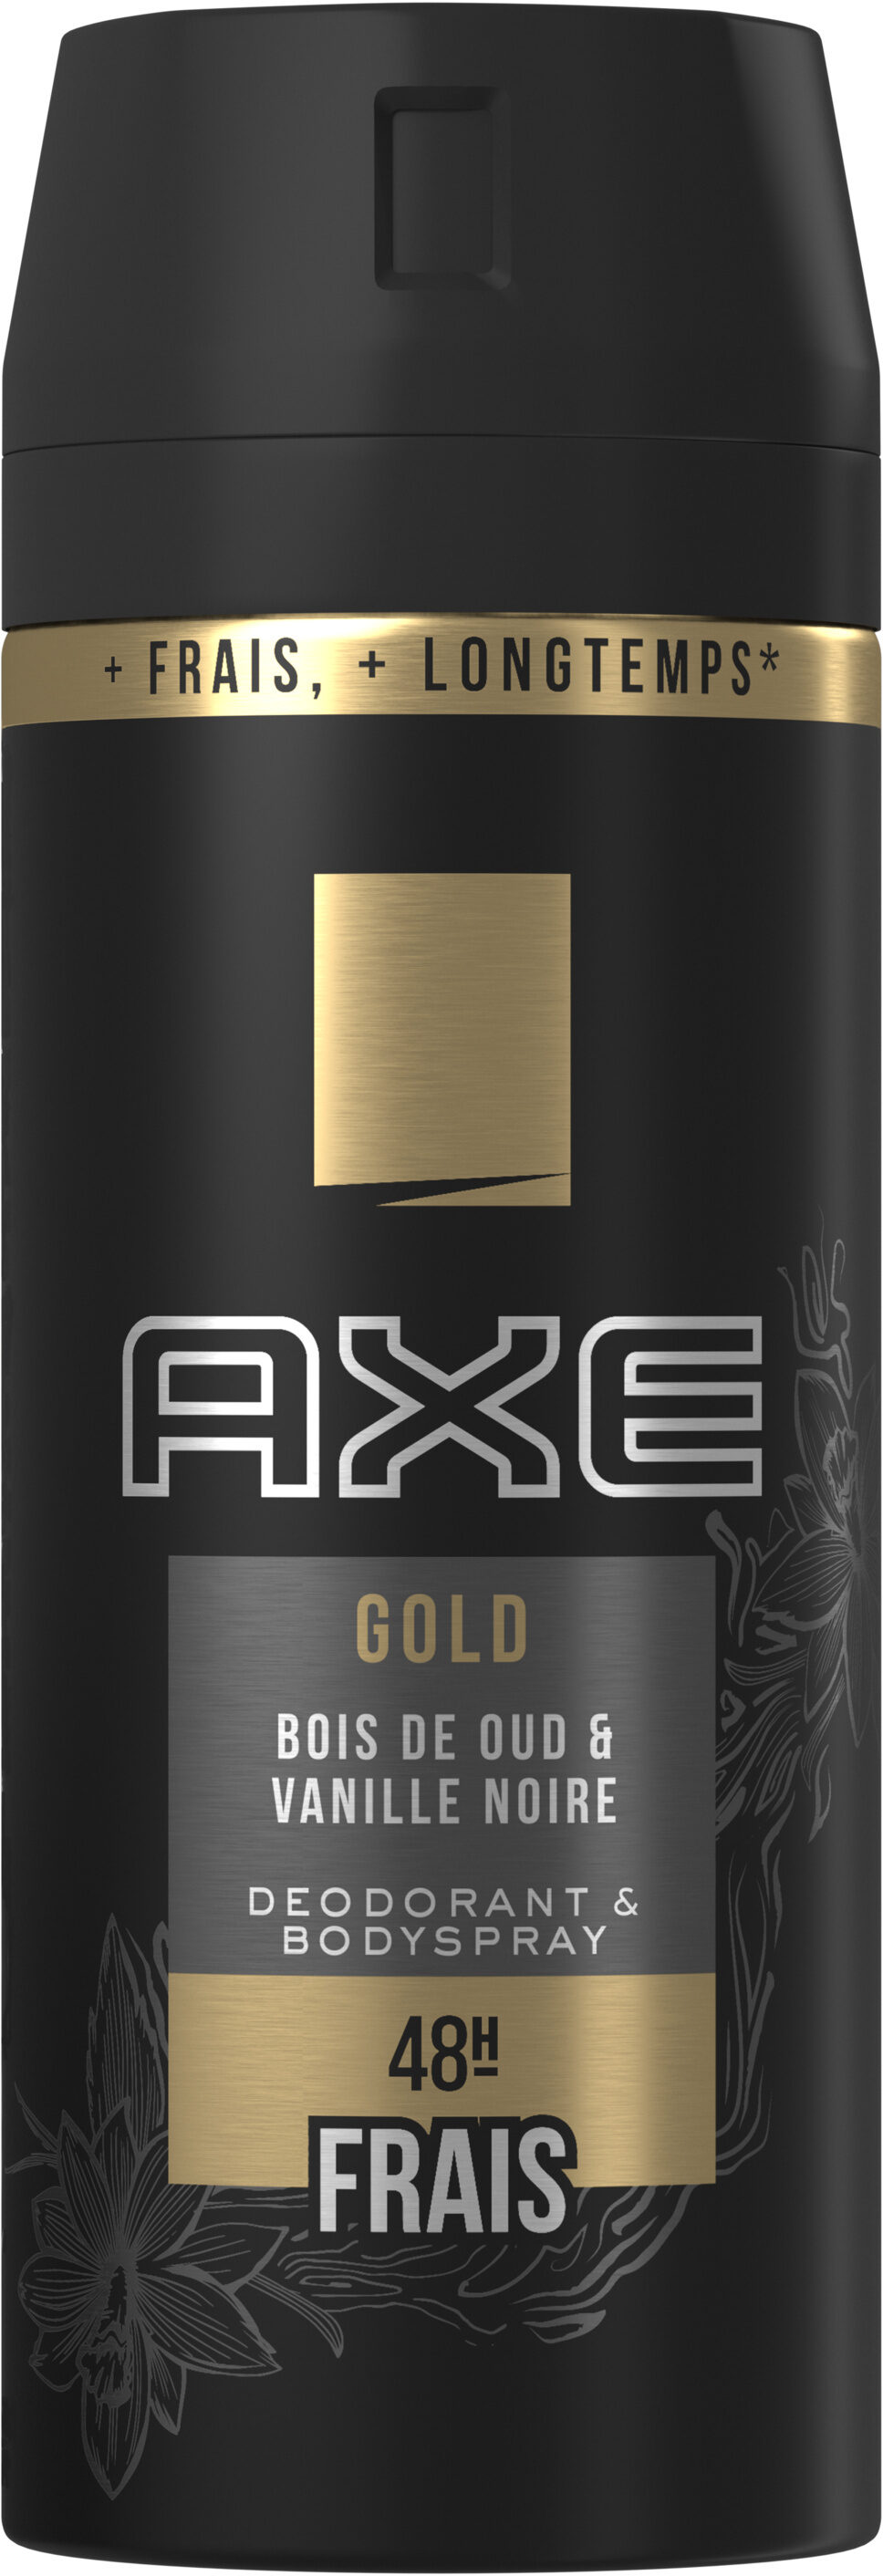 AXE Déodorant Homme Spray Antibactérien Gold - Product - fr